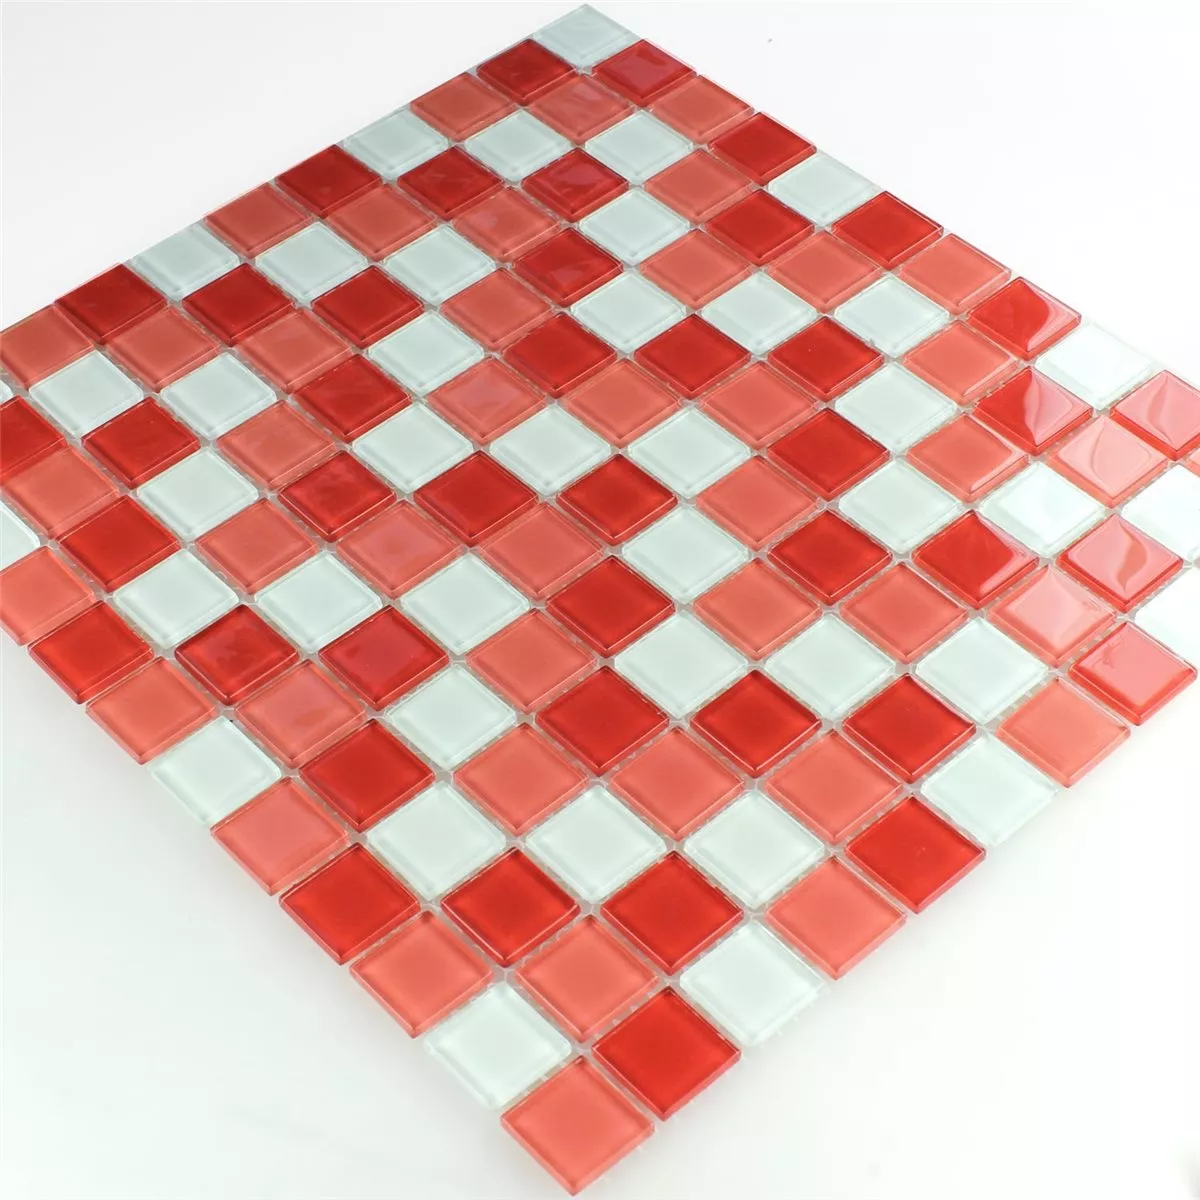 Sample Mosaic Tiles Glass Kozarica White Red Mix